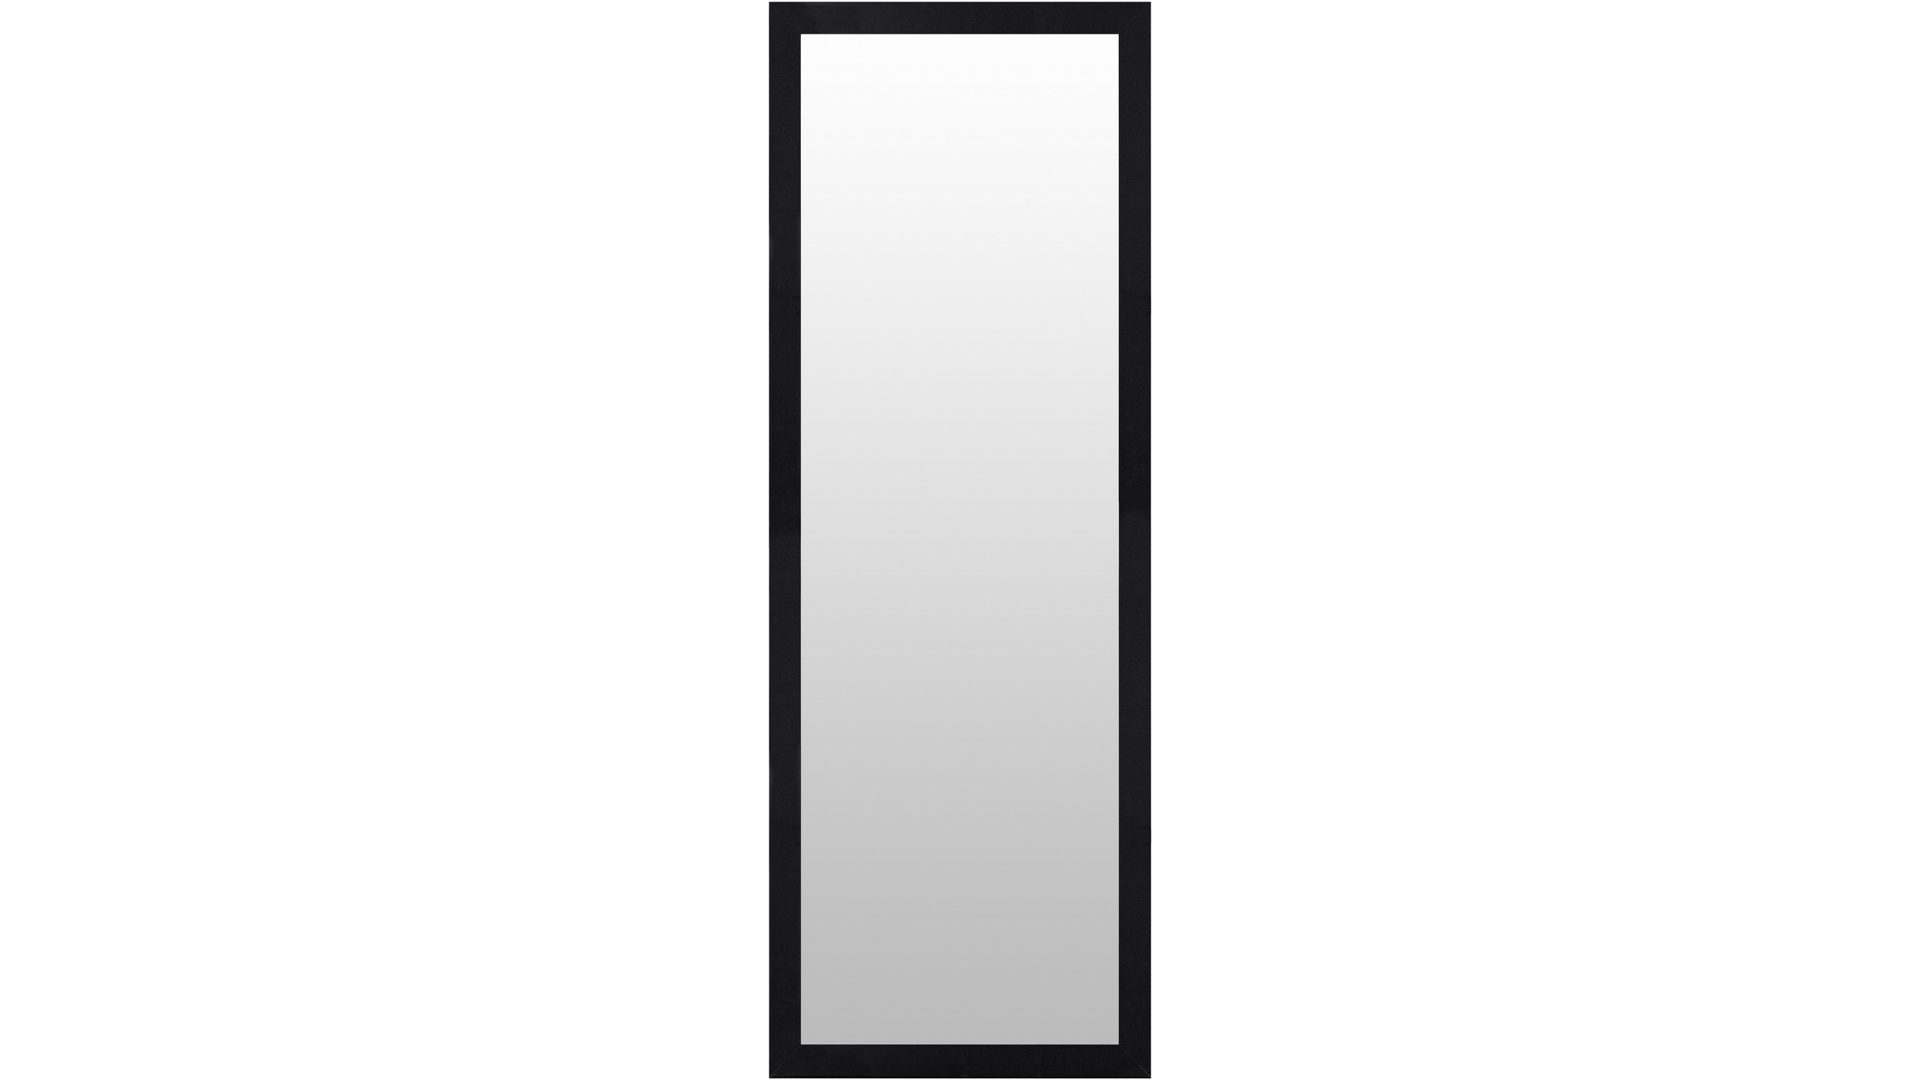 Wandspiegel Len-fra aus Kunststoff Spiegel in Schwarz LEN-FRA Wandspiegel Garderobenspiegel Nina schwarzer Kunststoffrahmen - ca. 49 x 139 cm